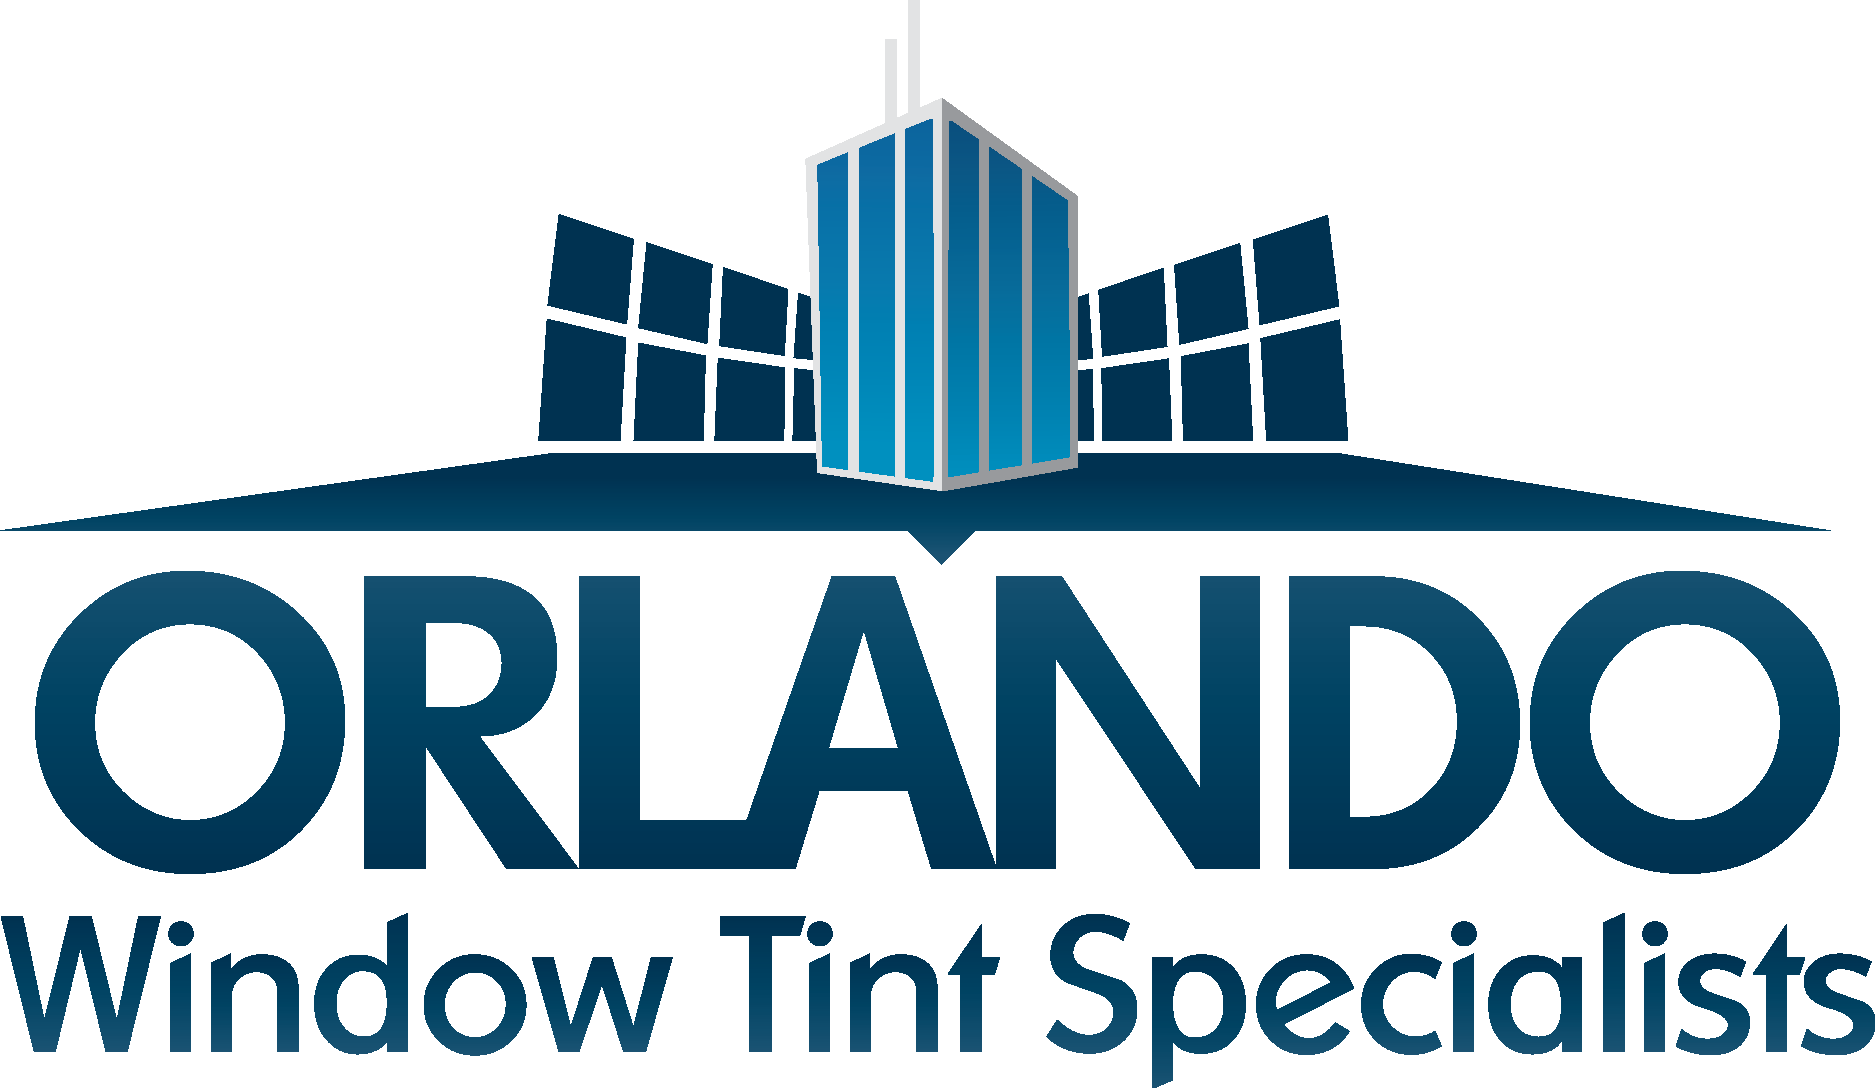 Orlando Window Tint Specialsits Logo Vector